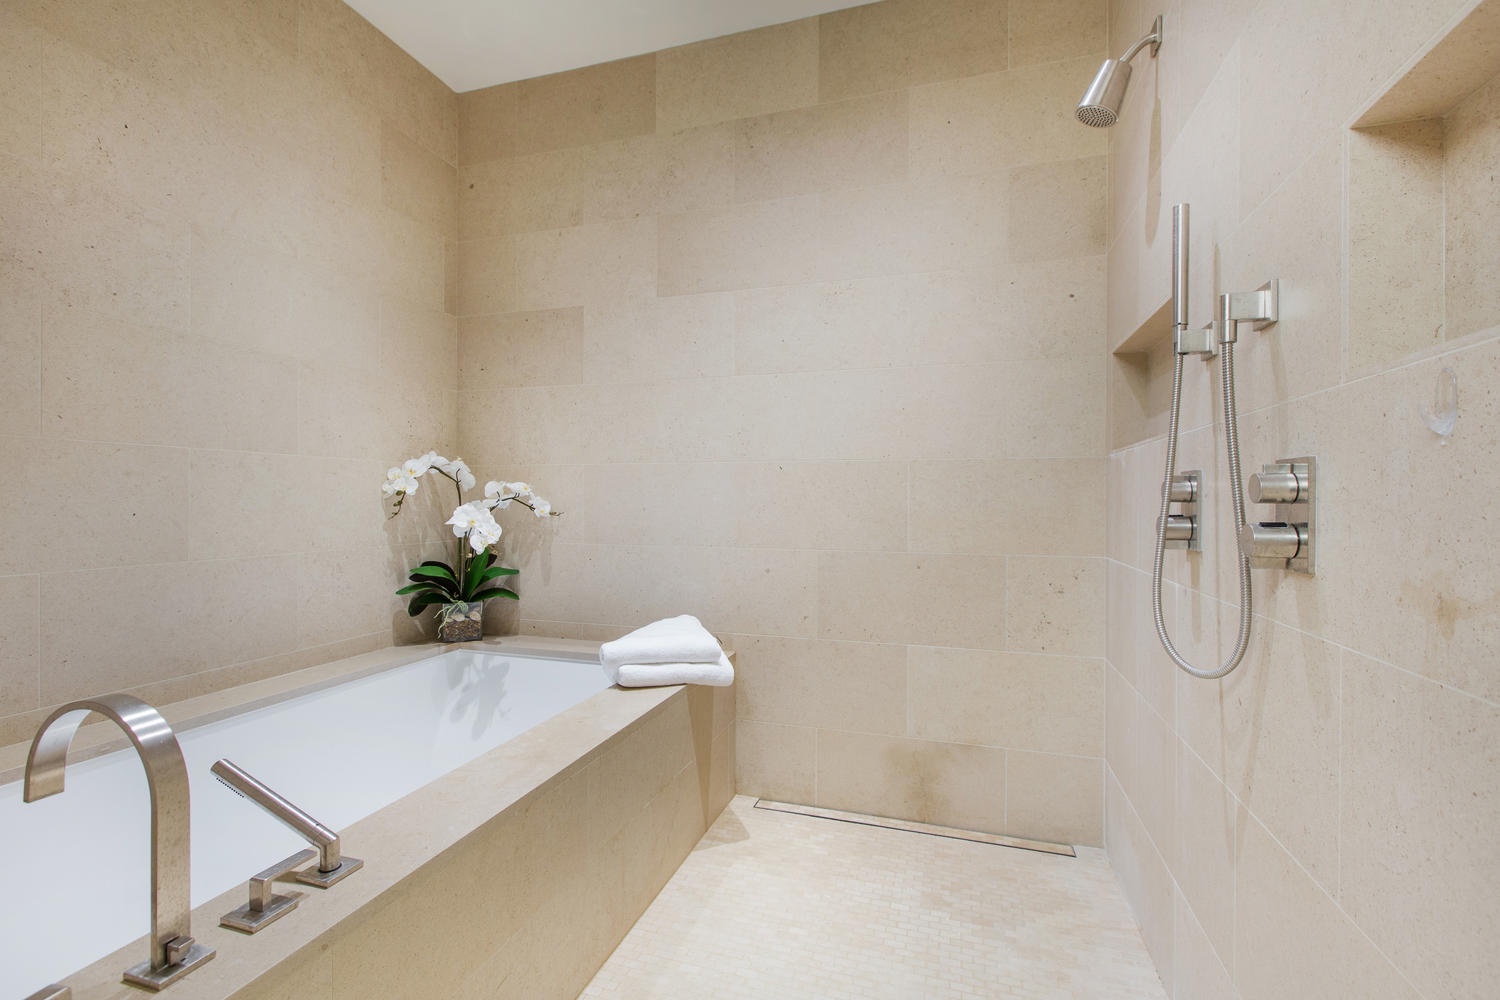 Honolulu Vacation Rentals, Park Lane Palm Resort - Primary Bathroom Tub/Shower Room